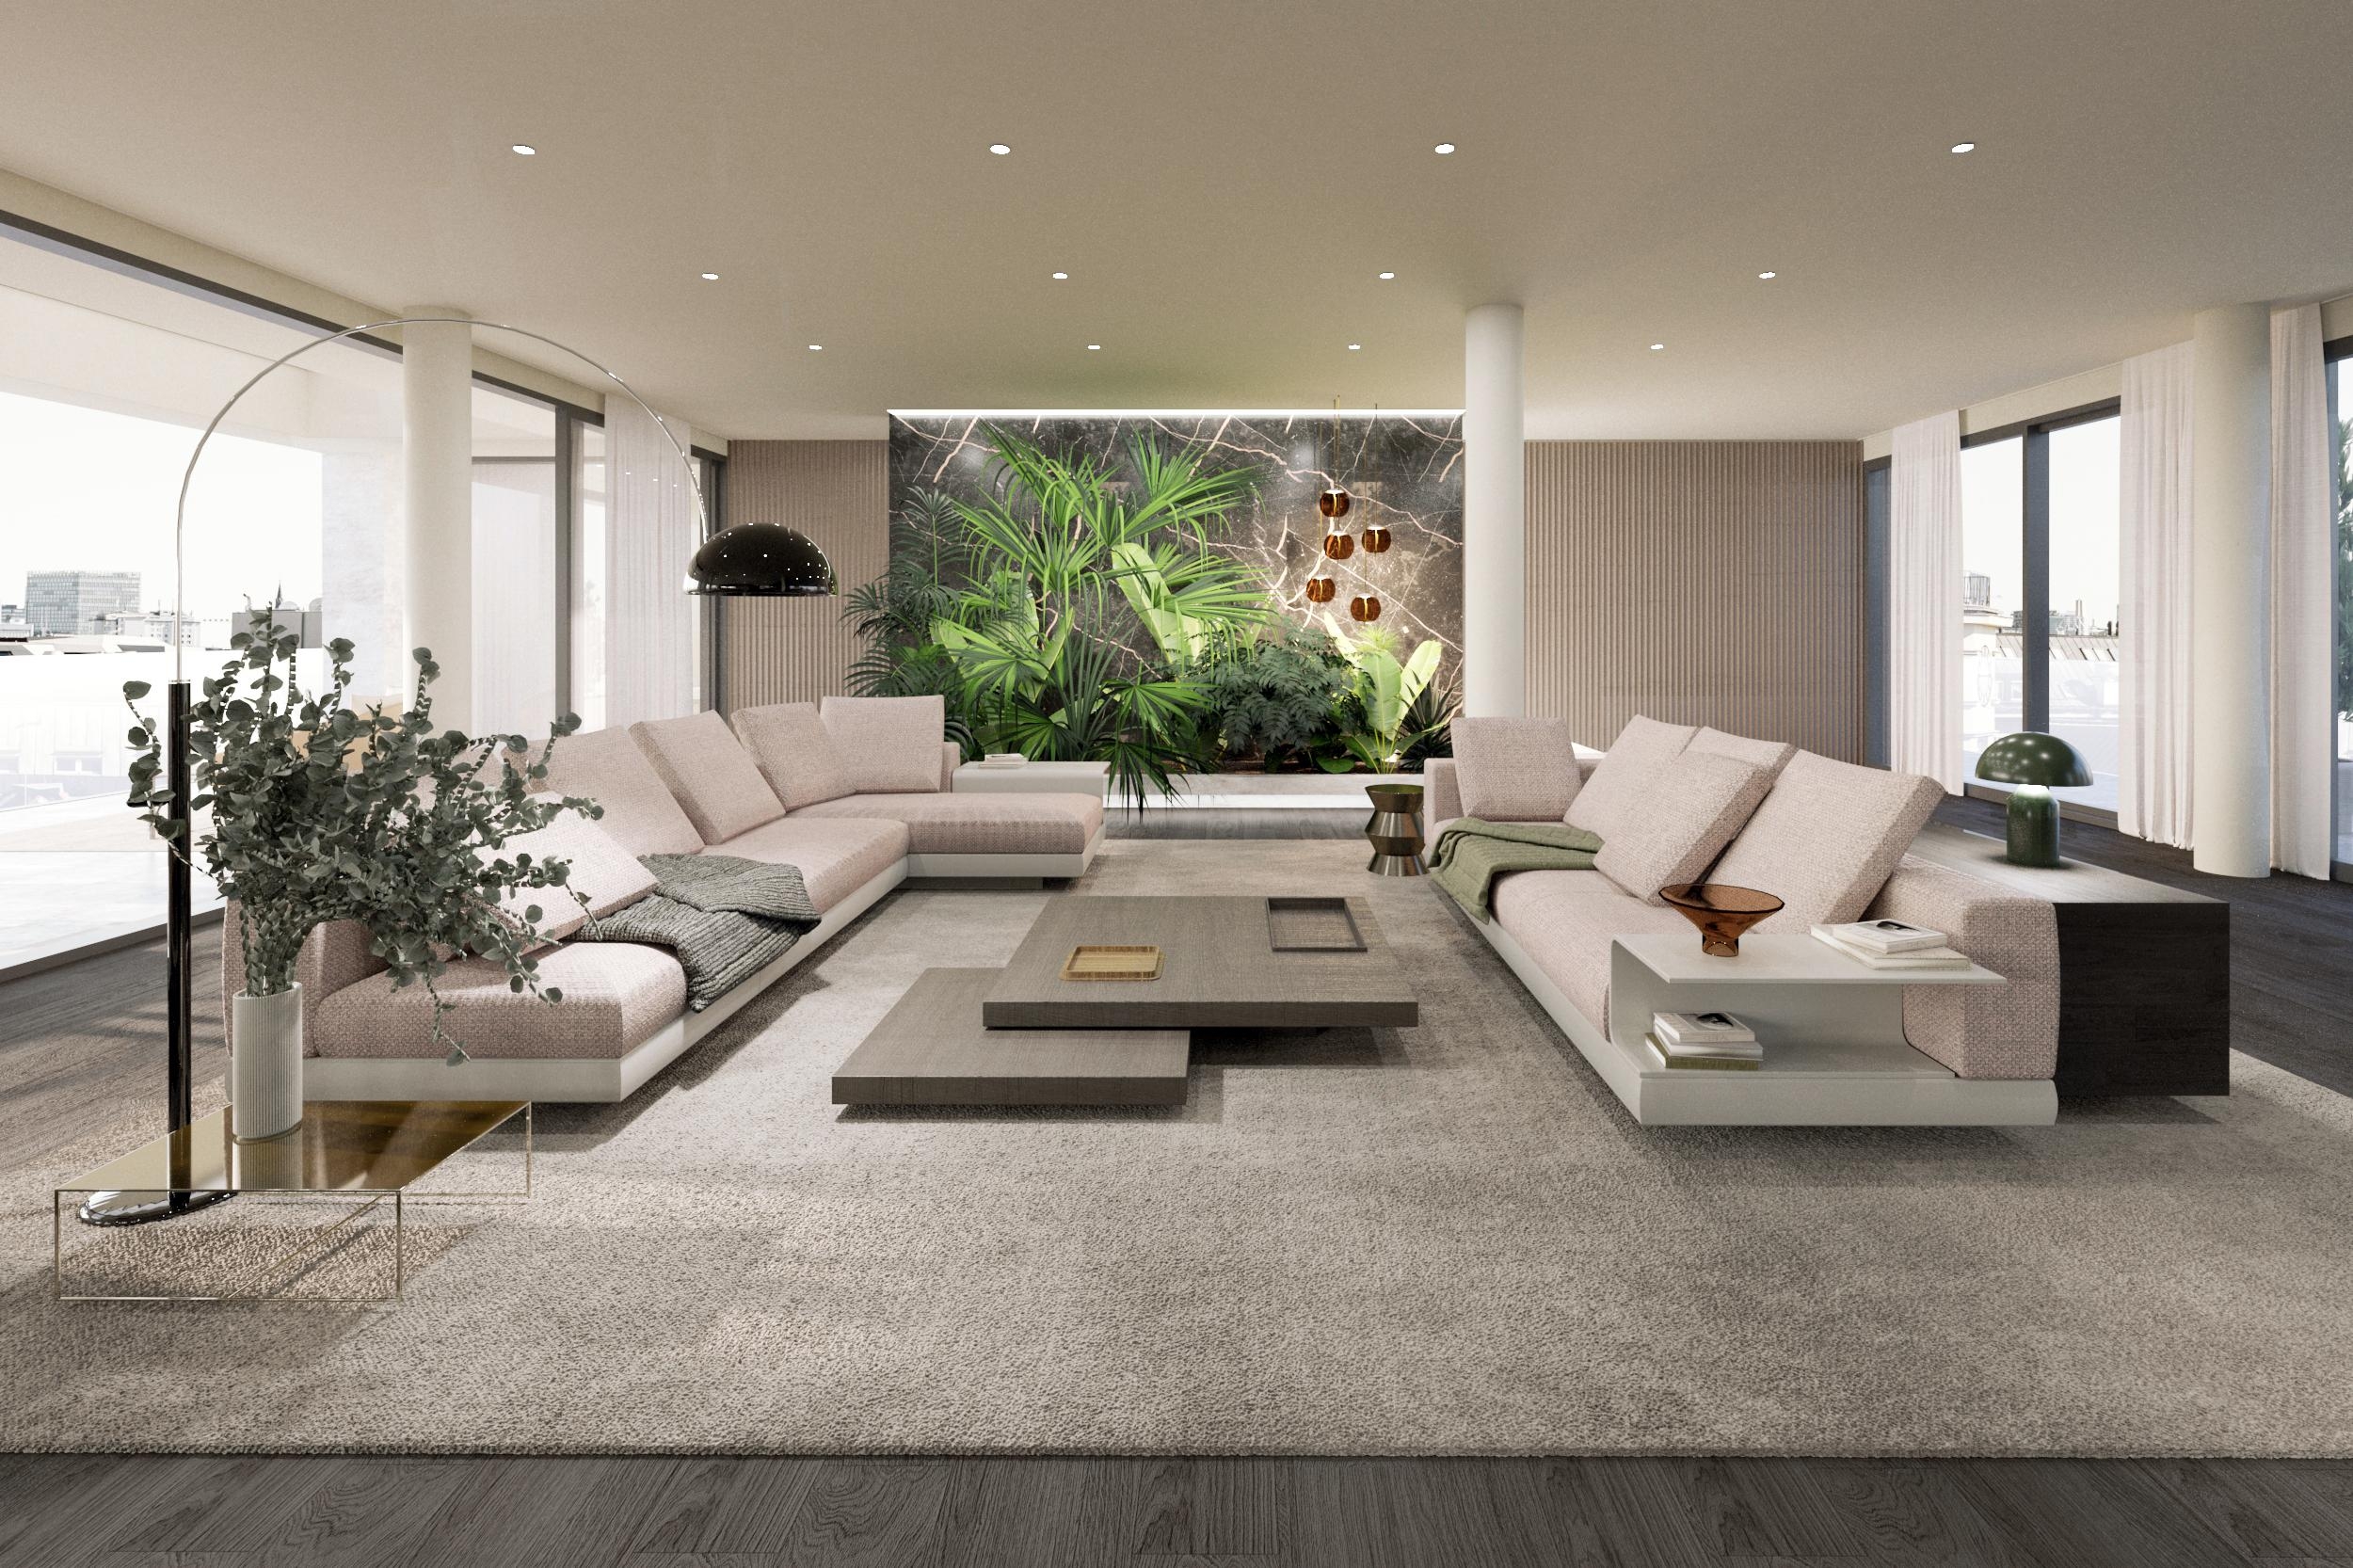 Projekt Penthouse K
#destilat #interiordesign #innenarchitektur #agentur #wien #linz #interior #interiordesigntrends #penthouse #private #livingroom #trendy #couch